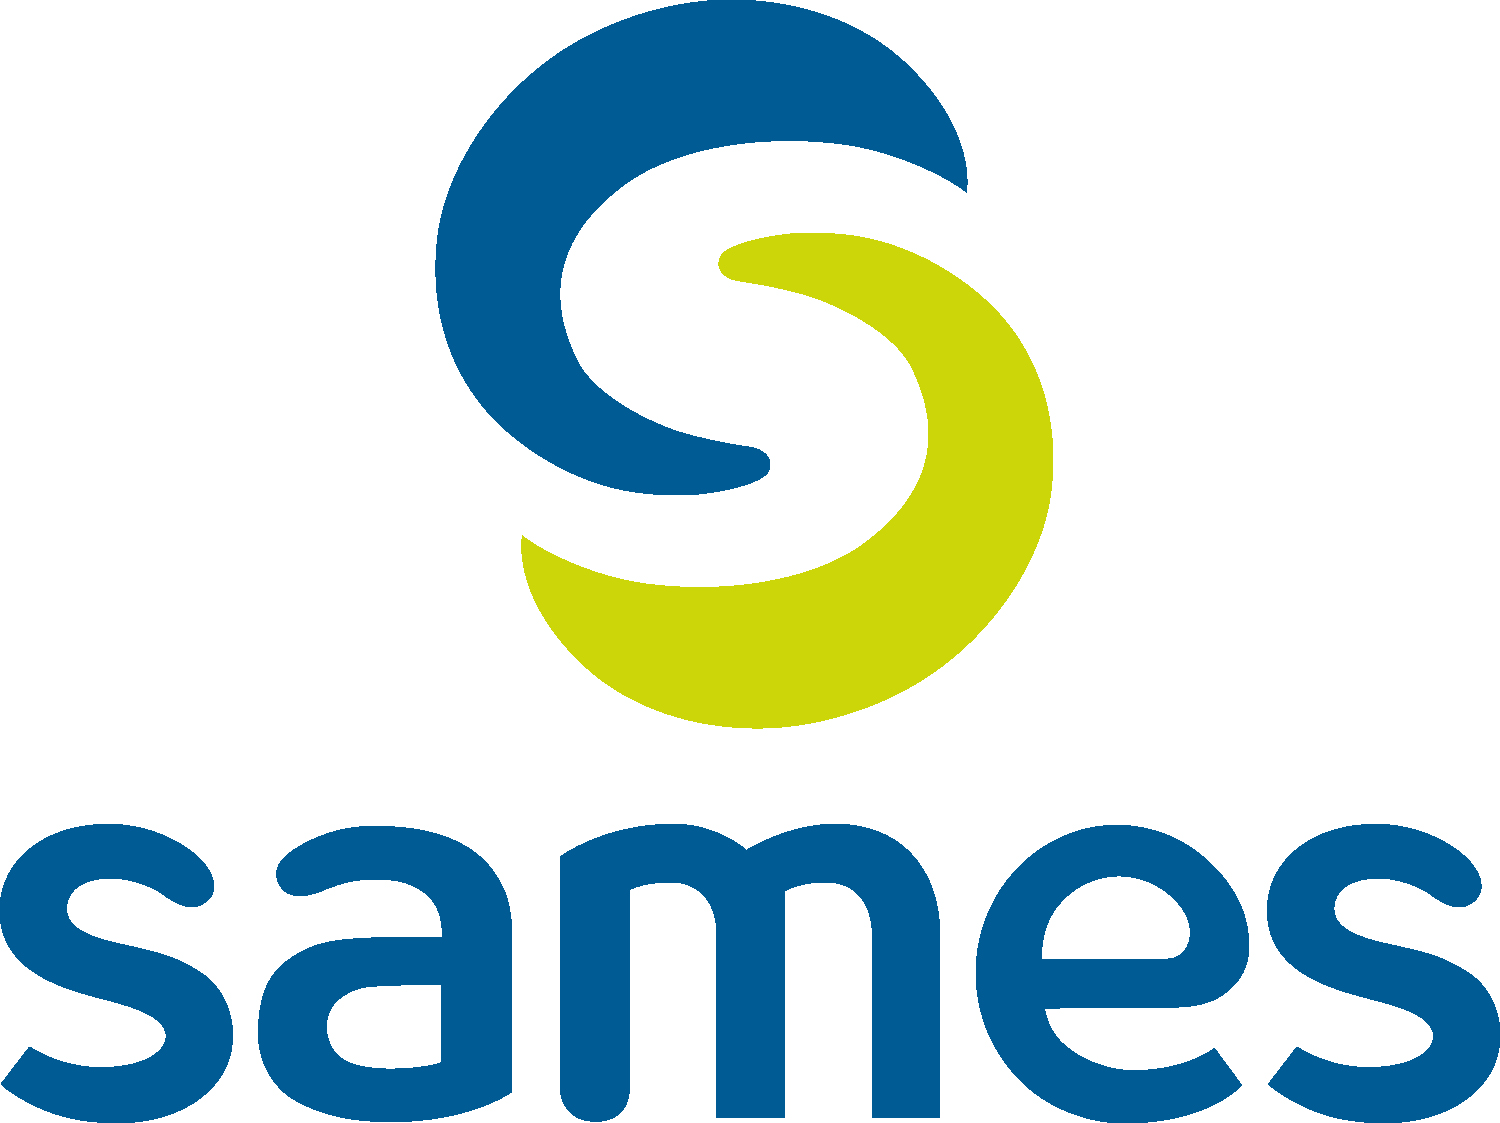 Sames GmbH